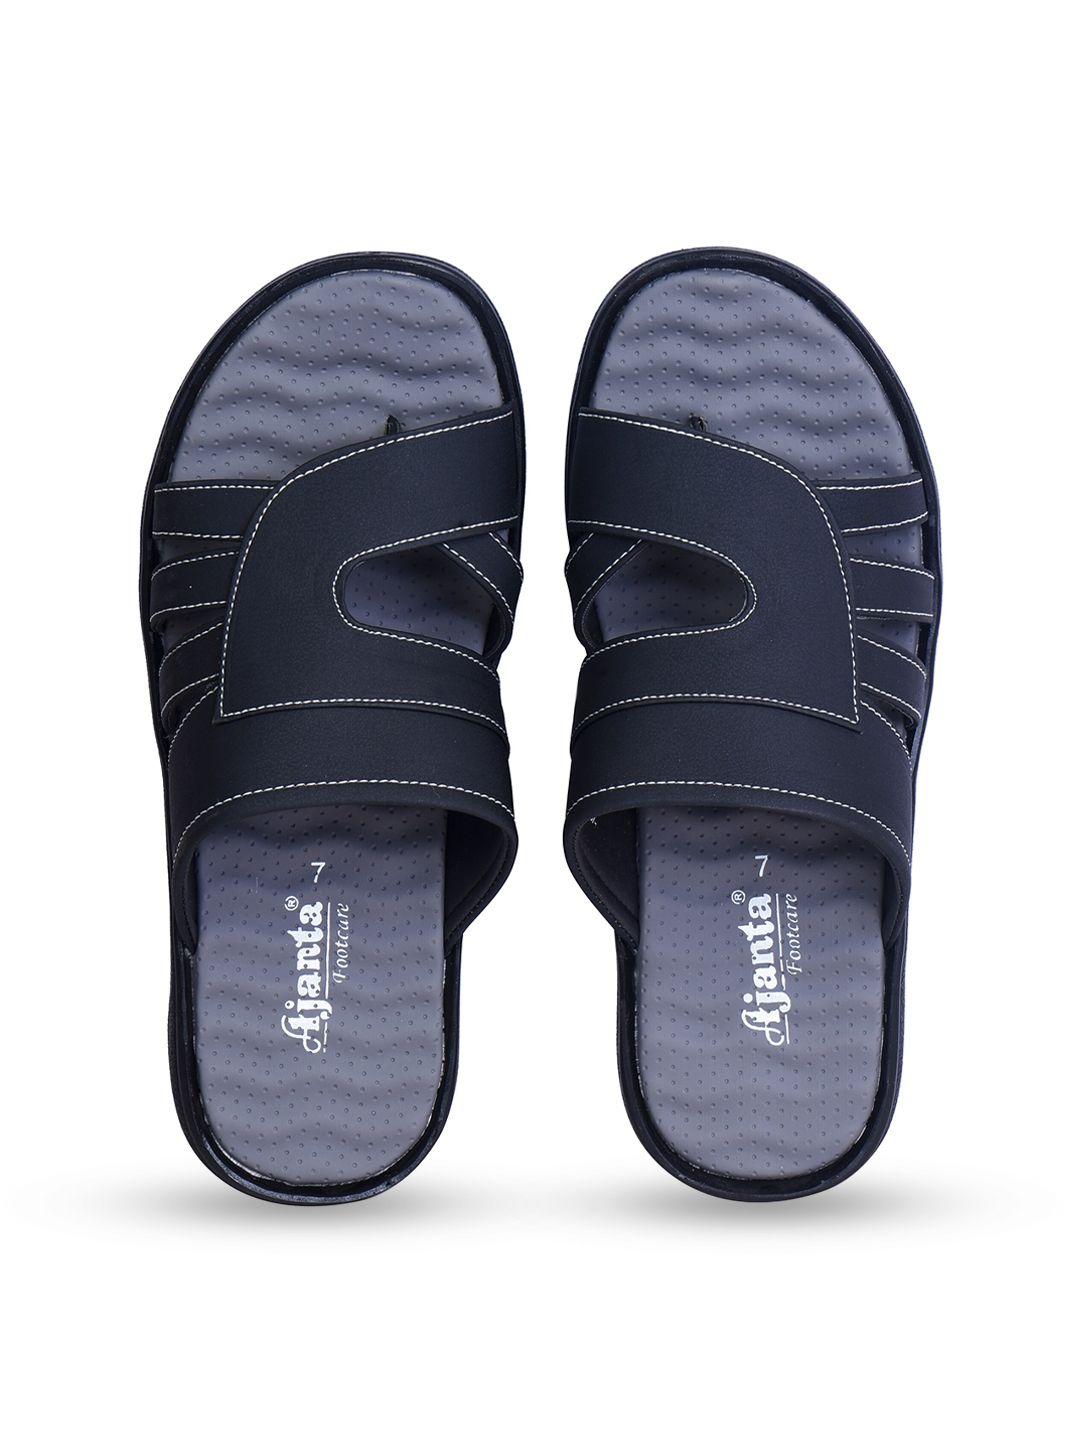 ajanta-men-black-comfort-sandals